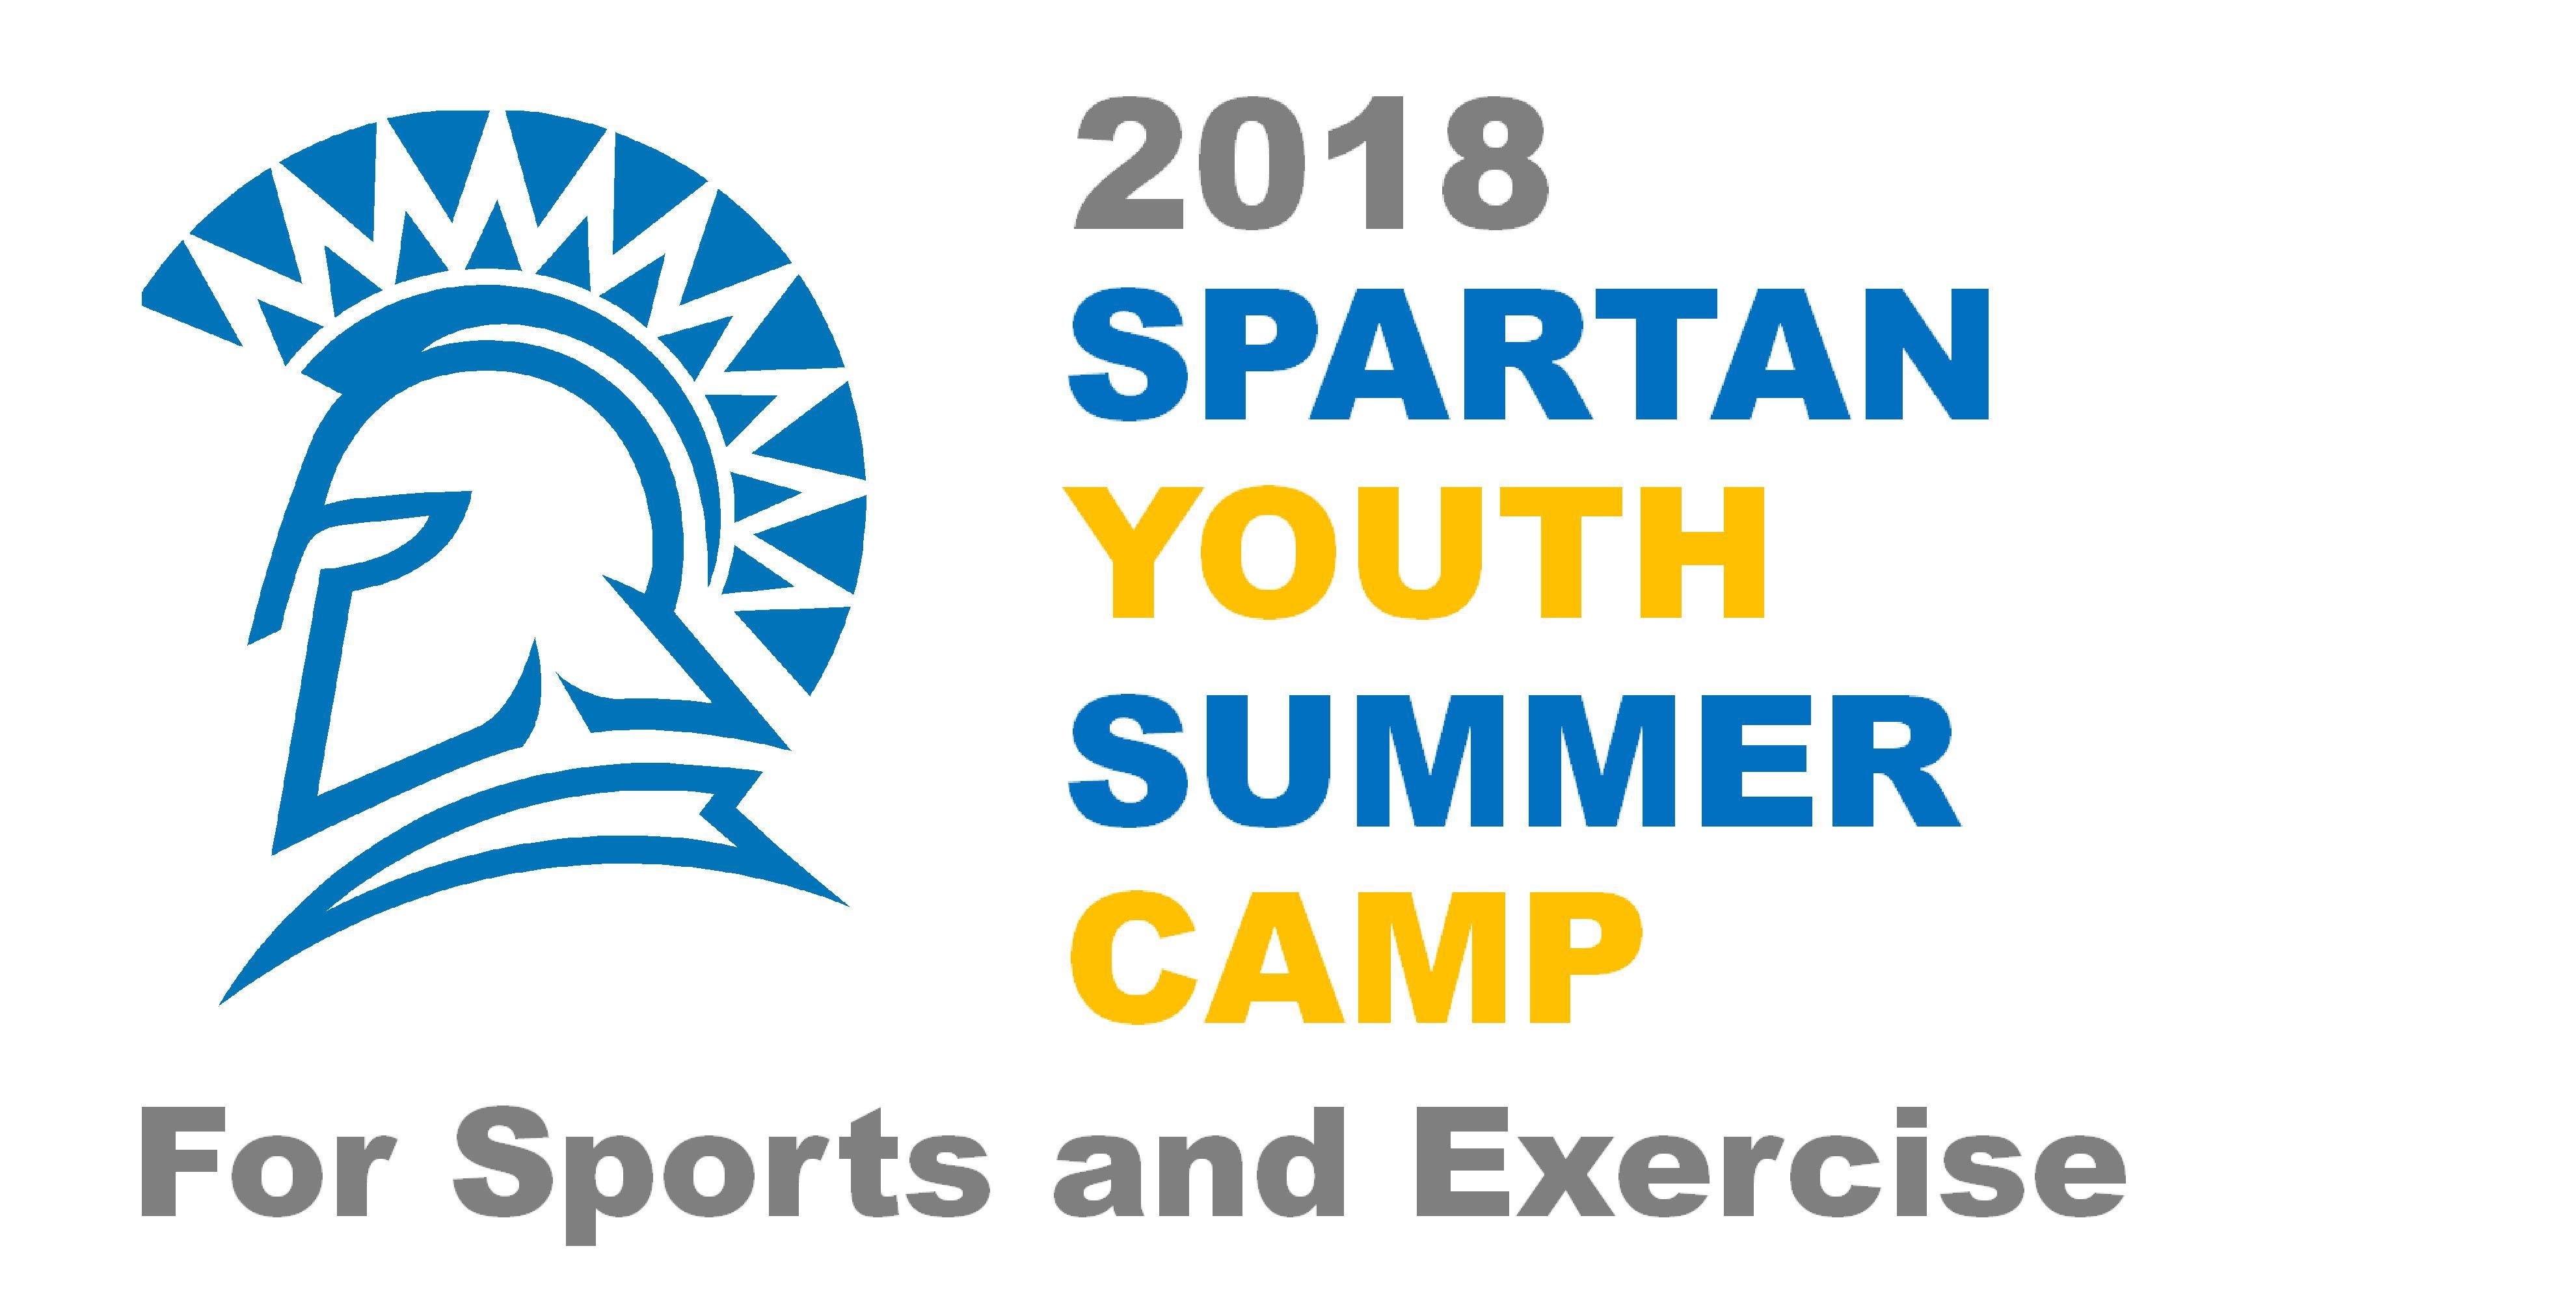 Fun Camp Logo - Spartan Youth Summer Camp. Department of Kinesiology. San Jose